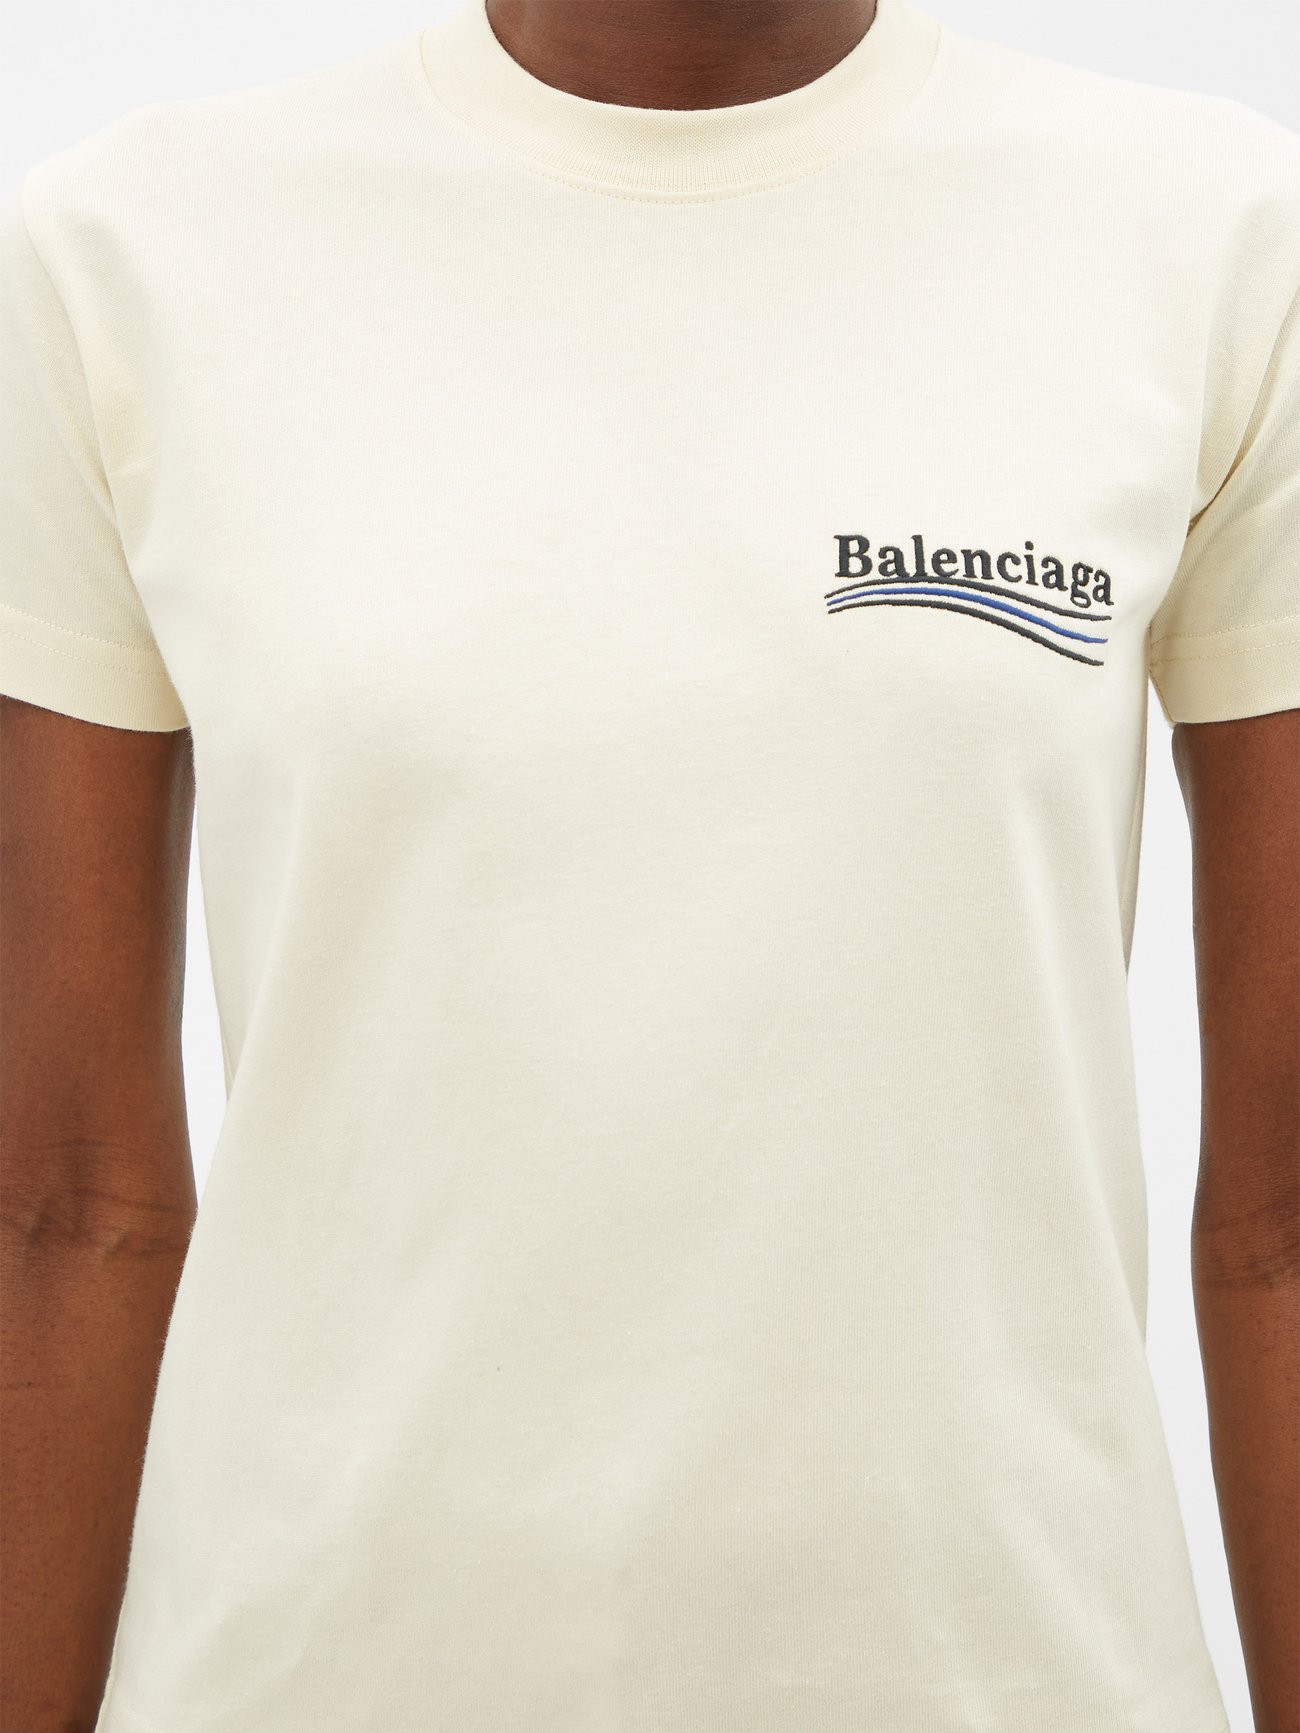 Balenciaga Distressed-effect Cotton T-shirt in Gray for Men